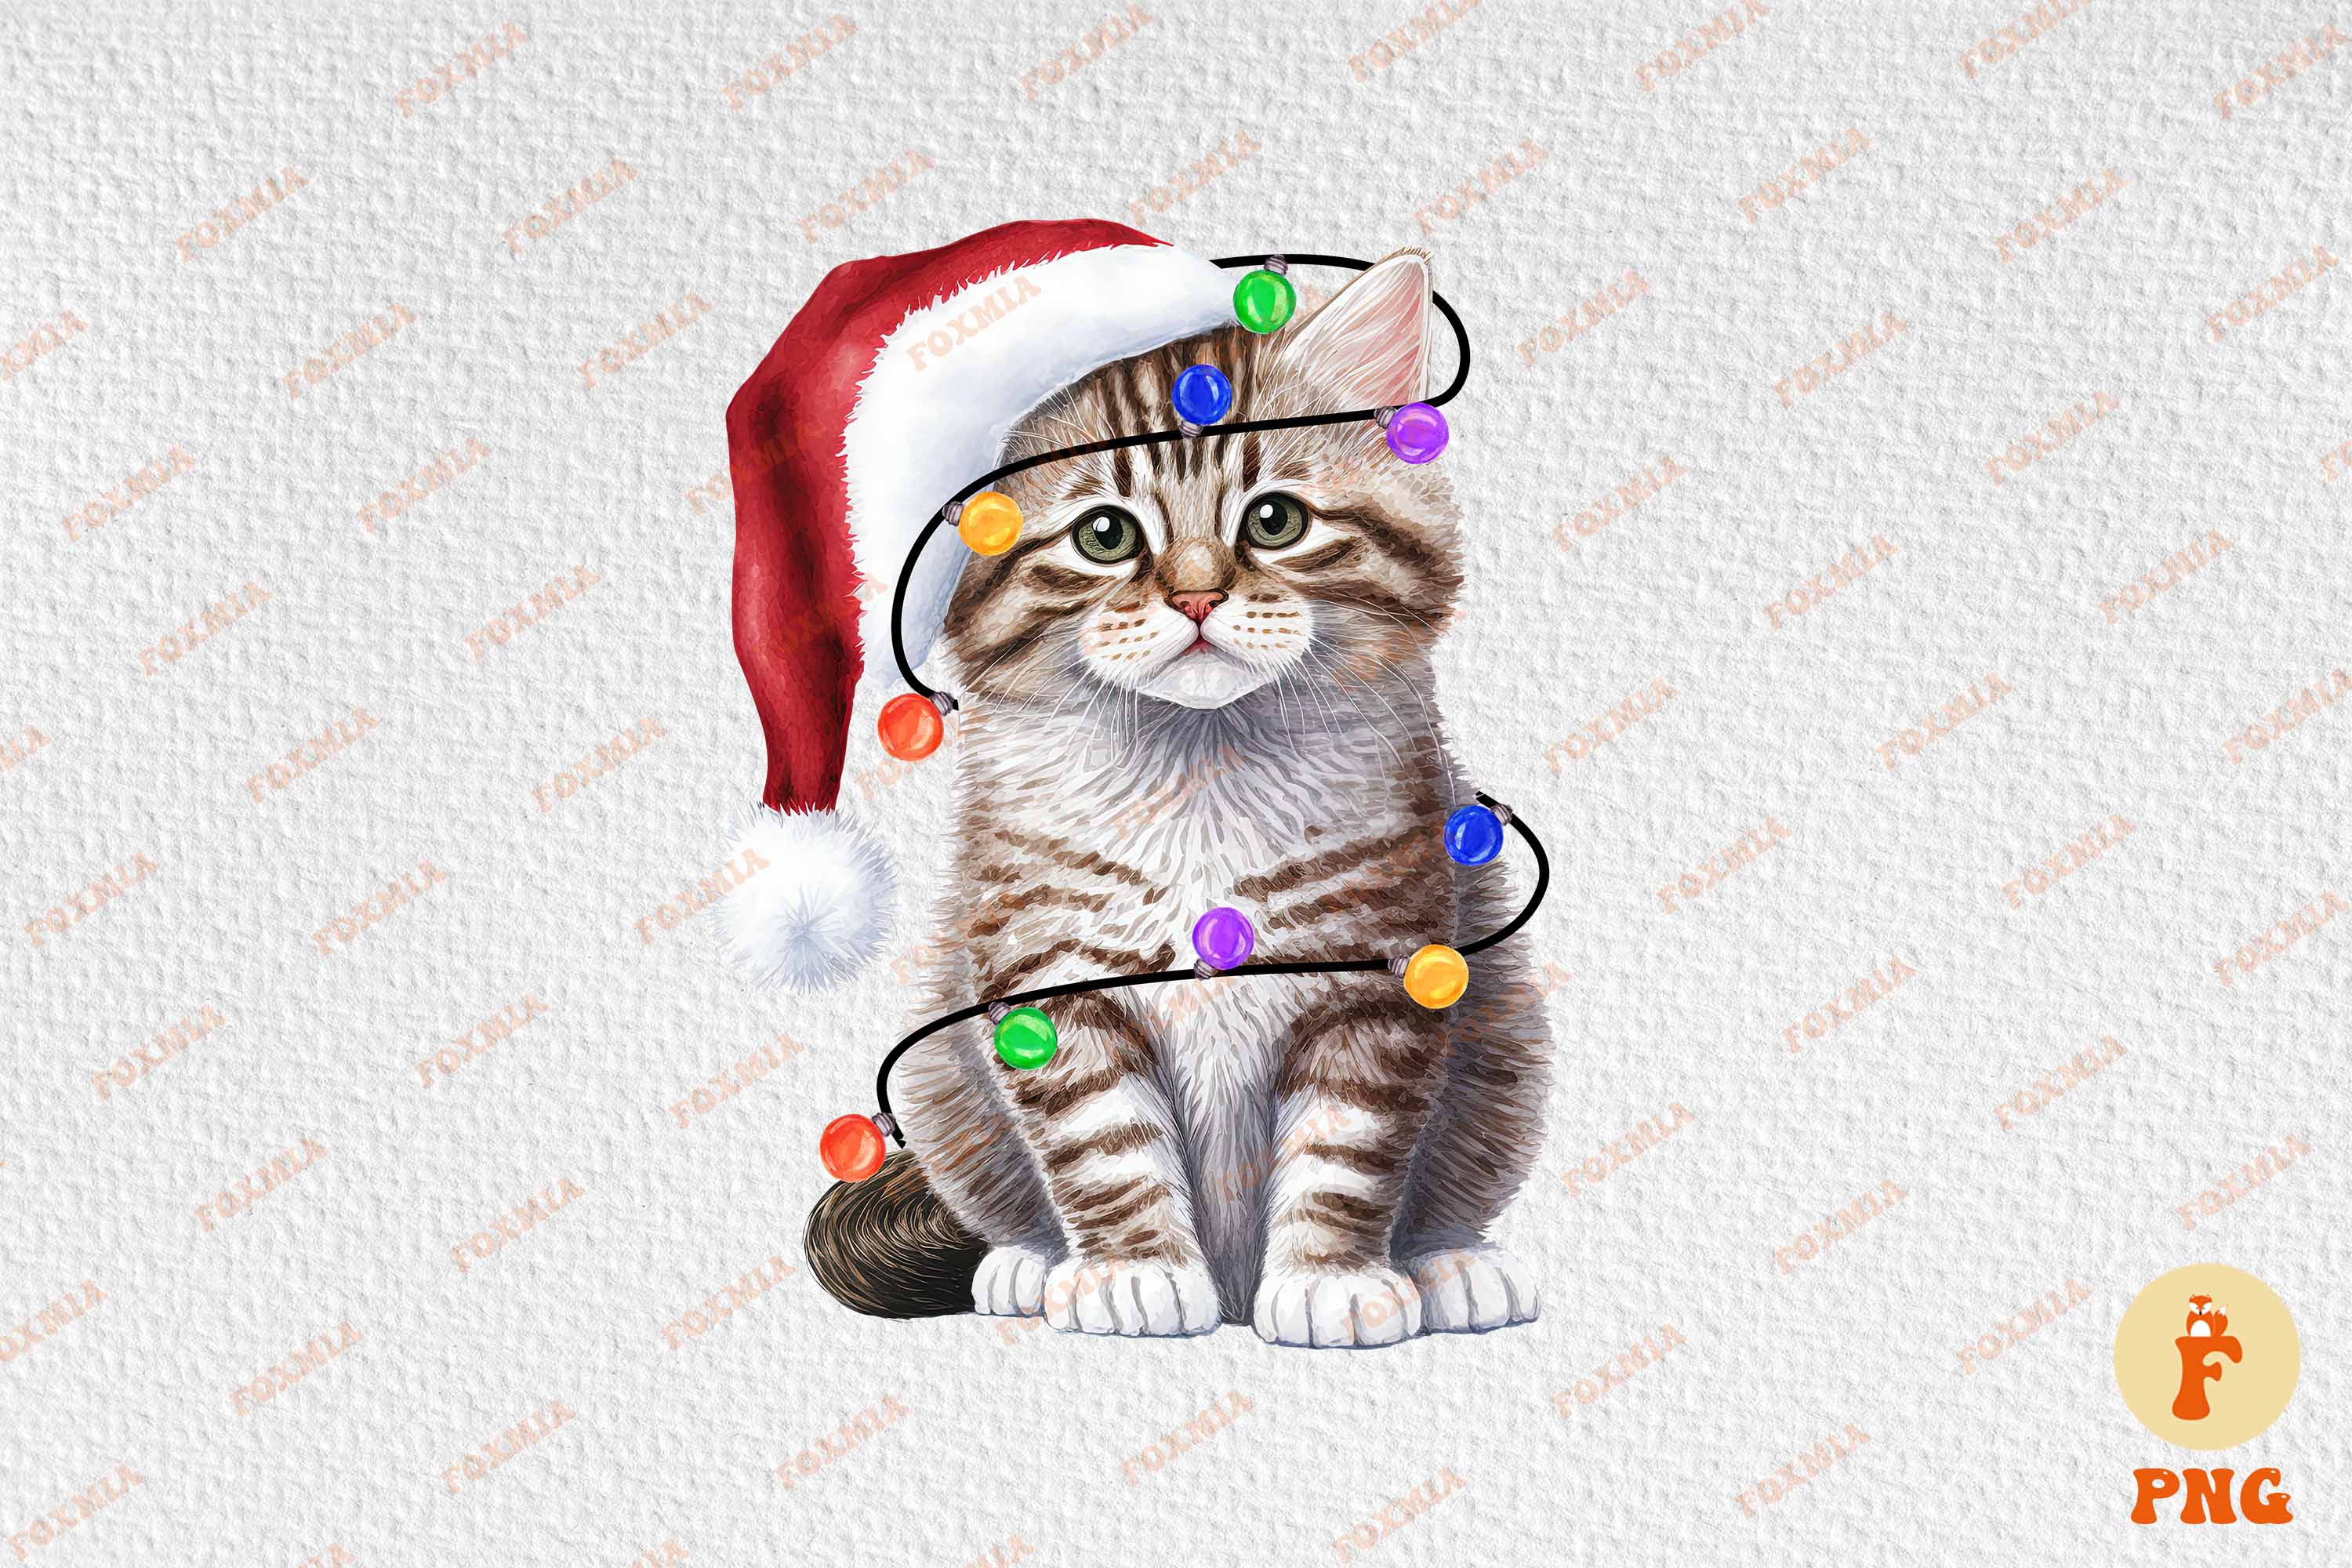 Unique image of a cat in a santa hat.